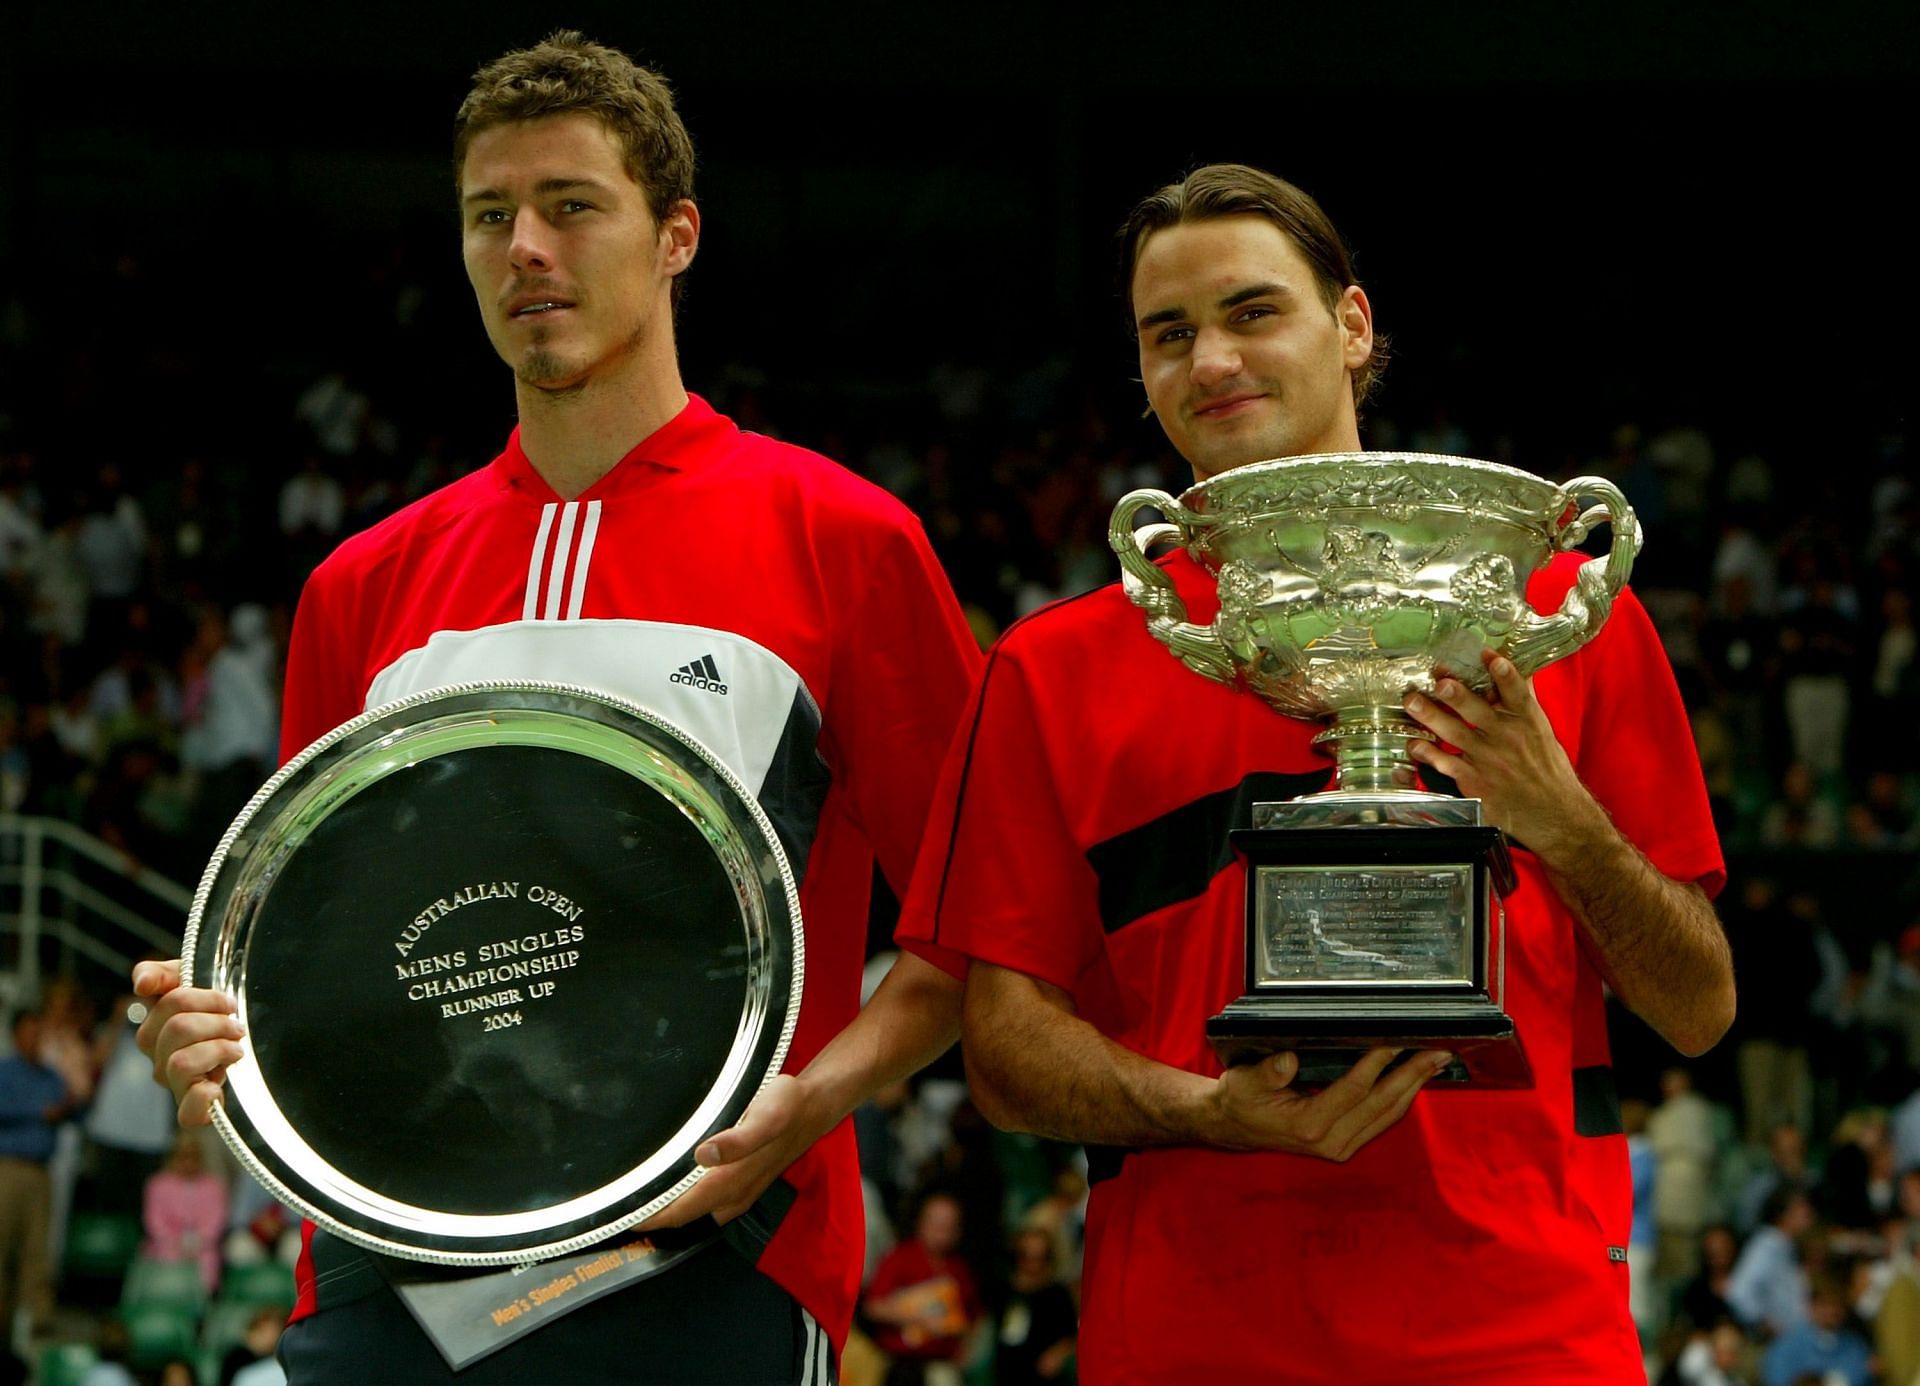 Roger Federer (right) and Marat Safin at the 2004 Australian Open